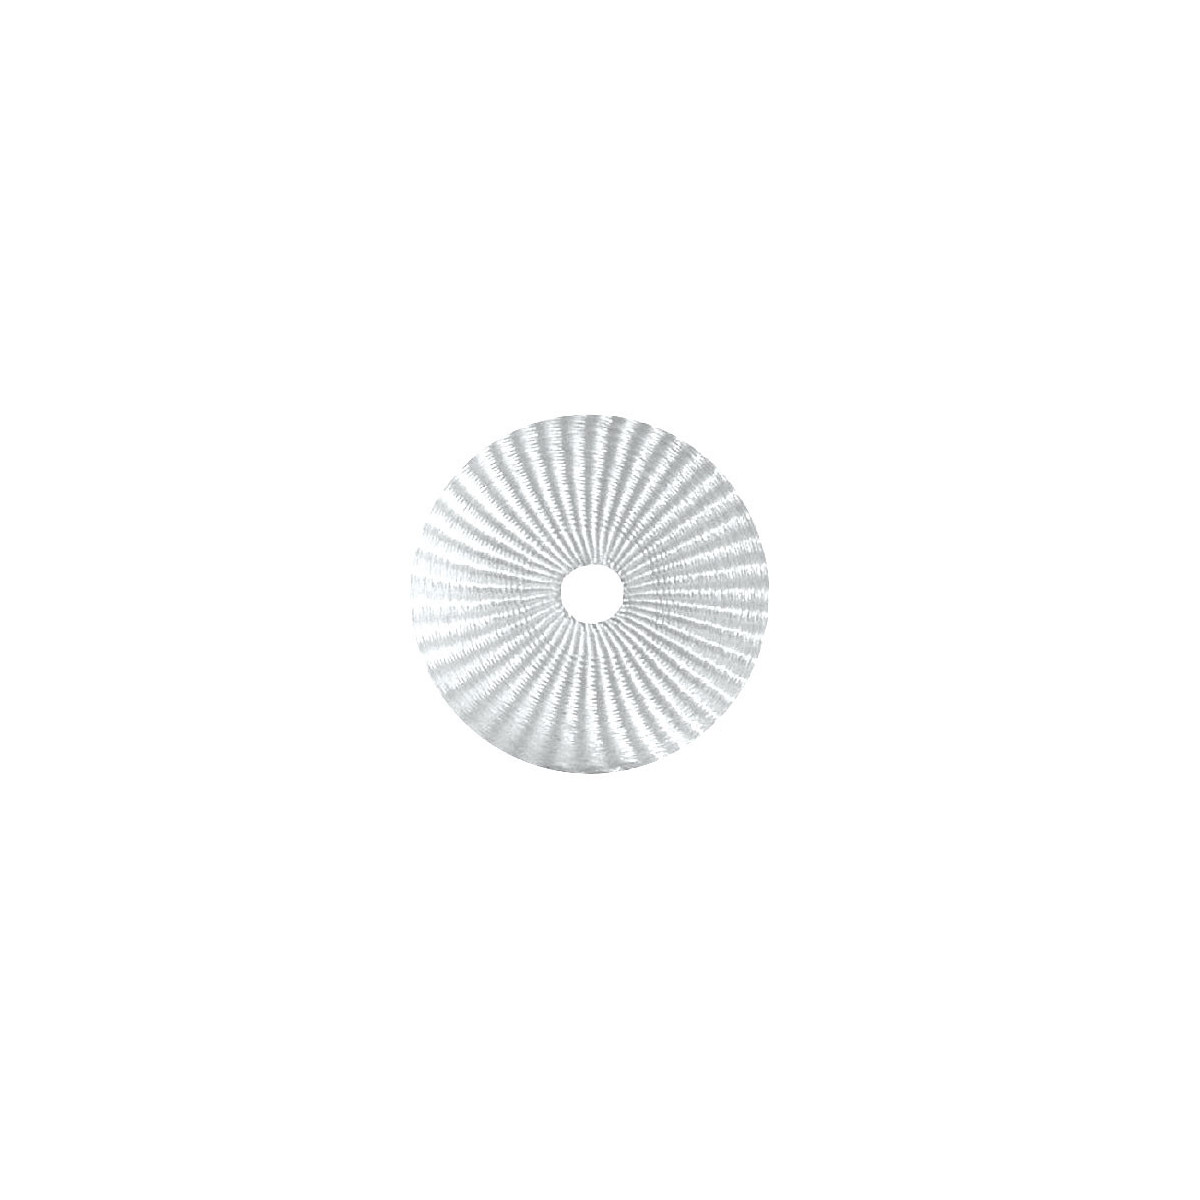 Round nylon disc 40 cm with hole